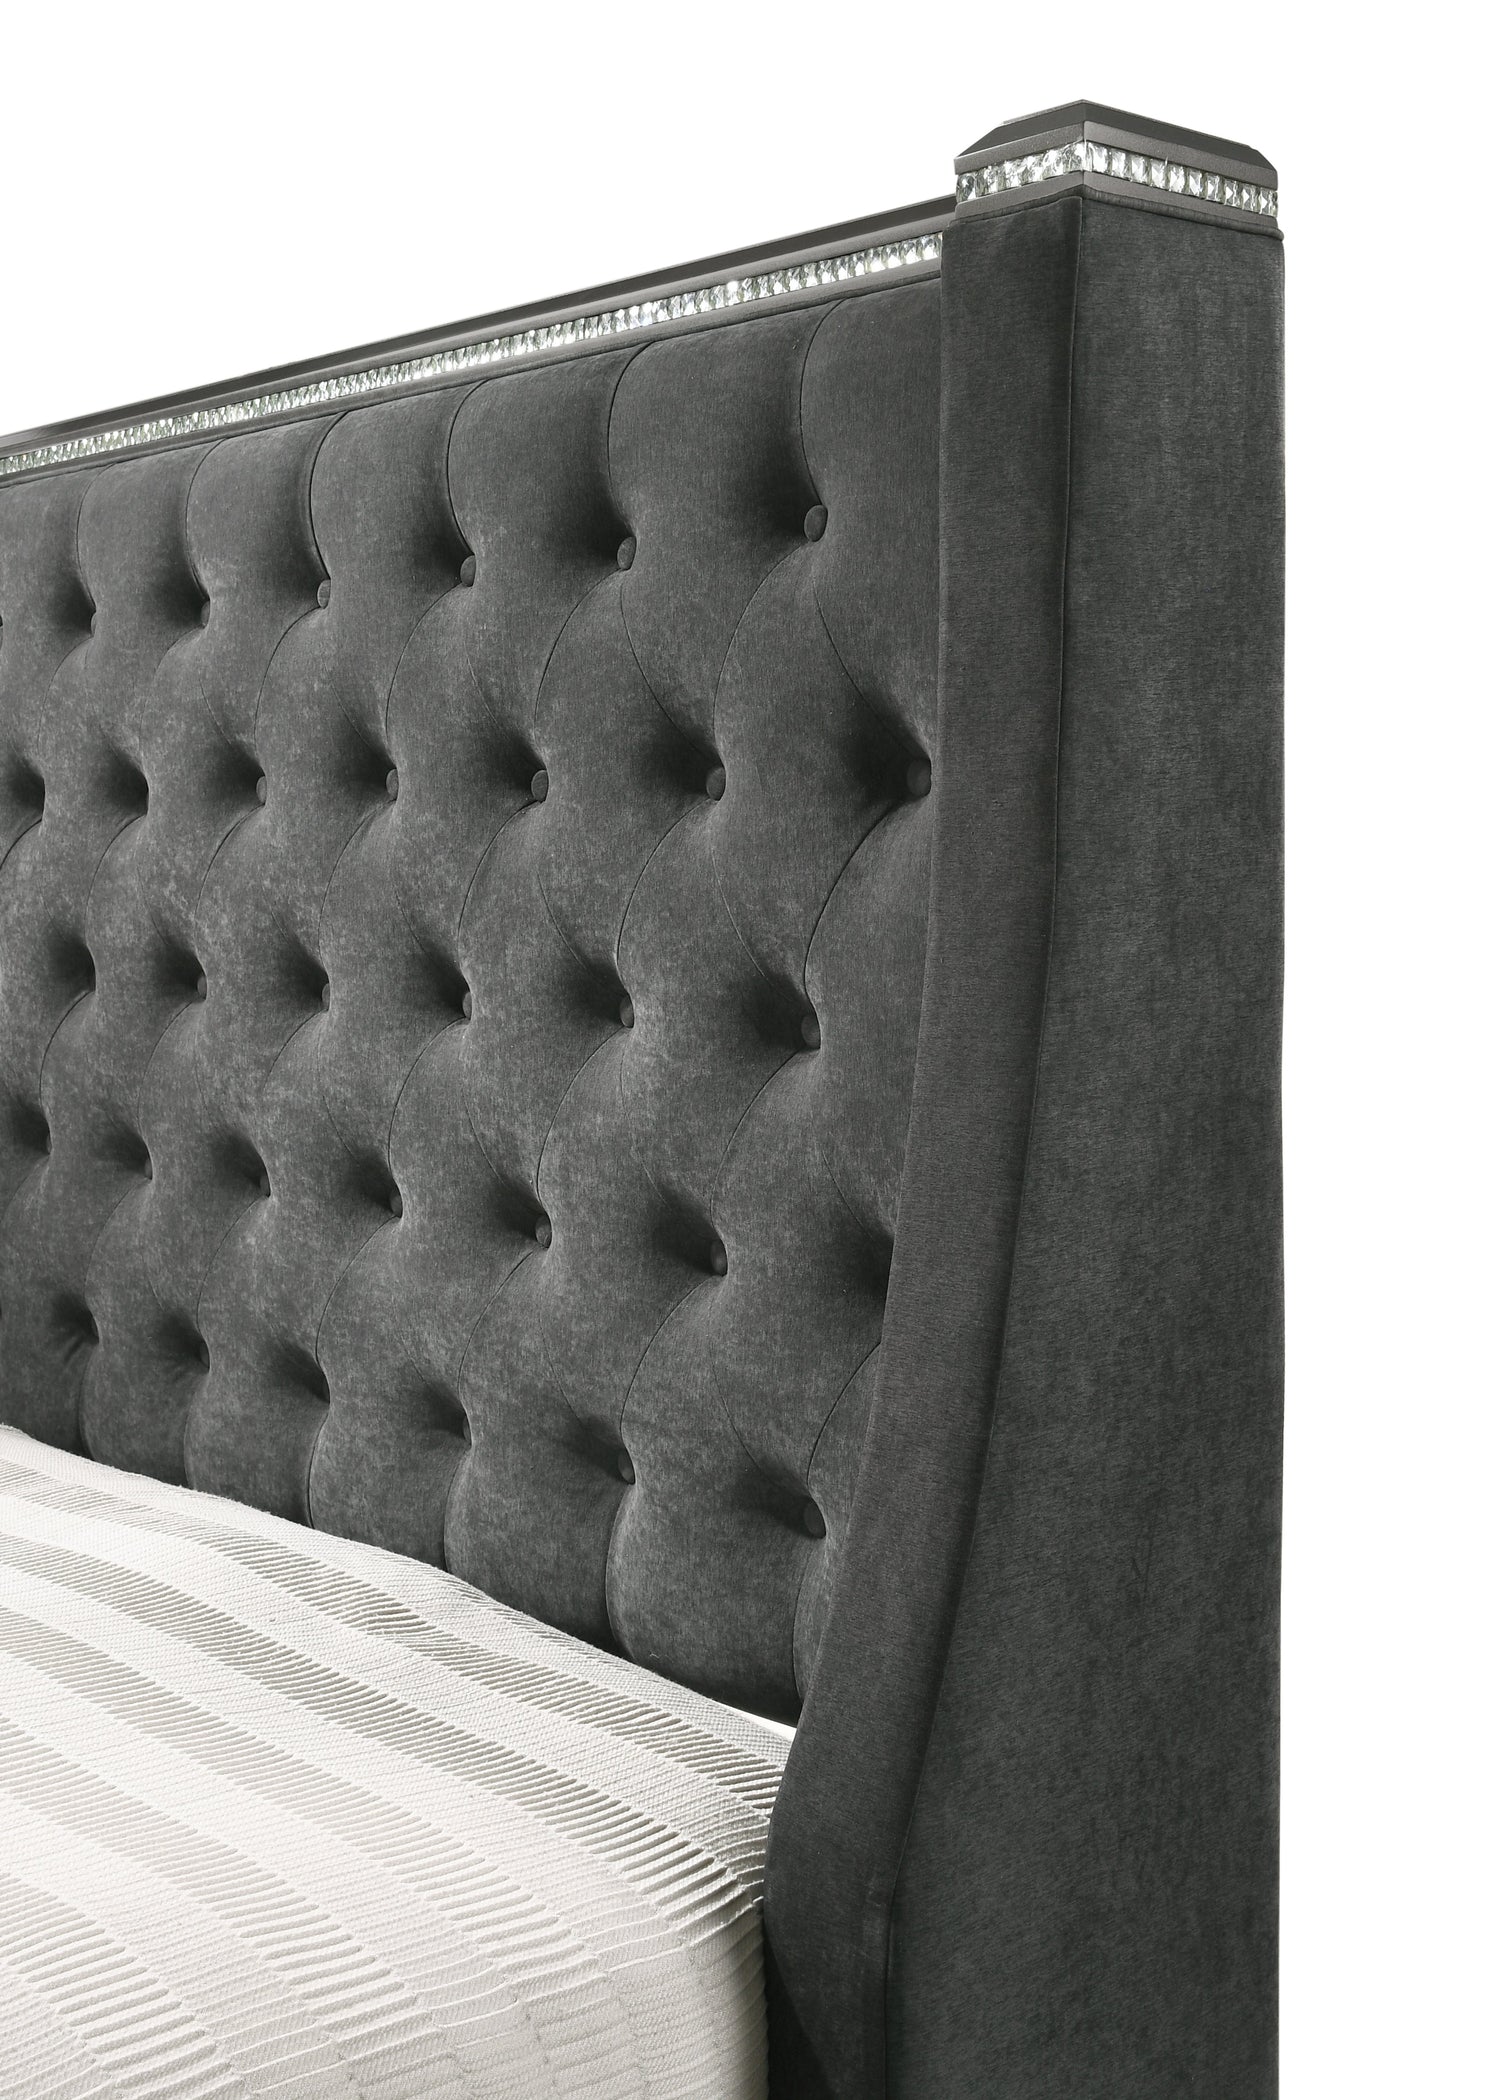 Giovani Gray Queen Upholstered Panel Bed - SET | B7900-Q-HB | B7900-Q-FB | B7900-KQ-RAIL - Bien Home Furniture &amp; Electronics